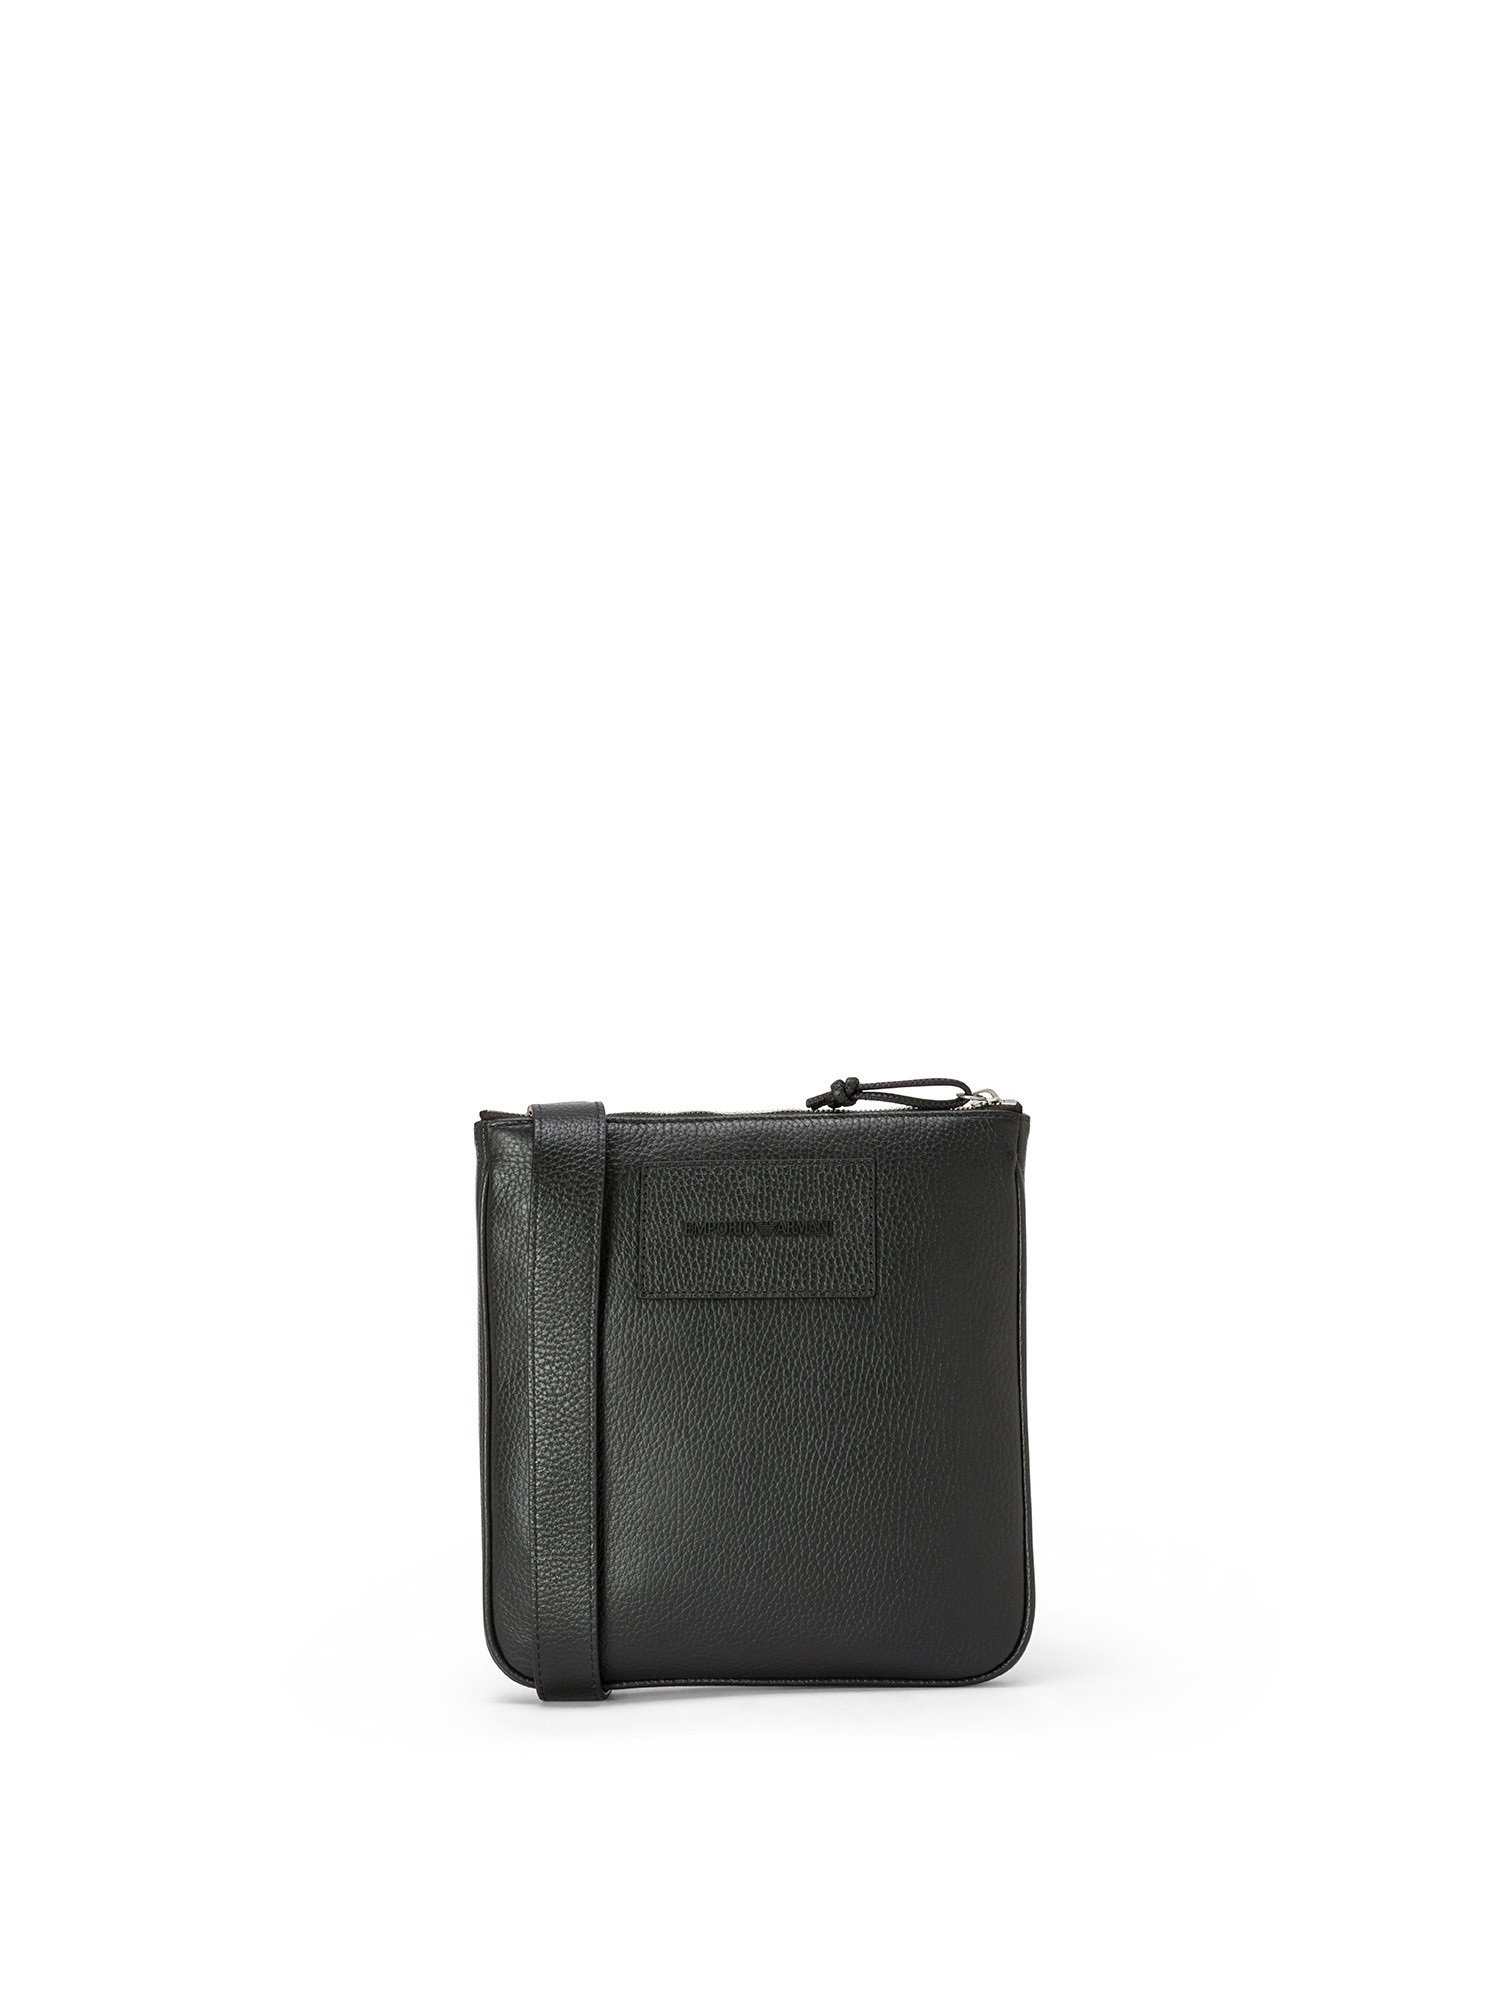 Emporio Armani - Shoulder bag in leather with logo, Black, large image number 0